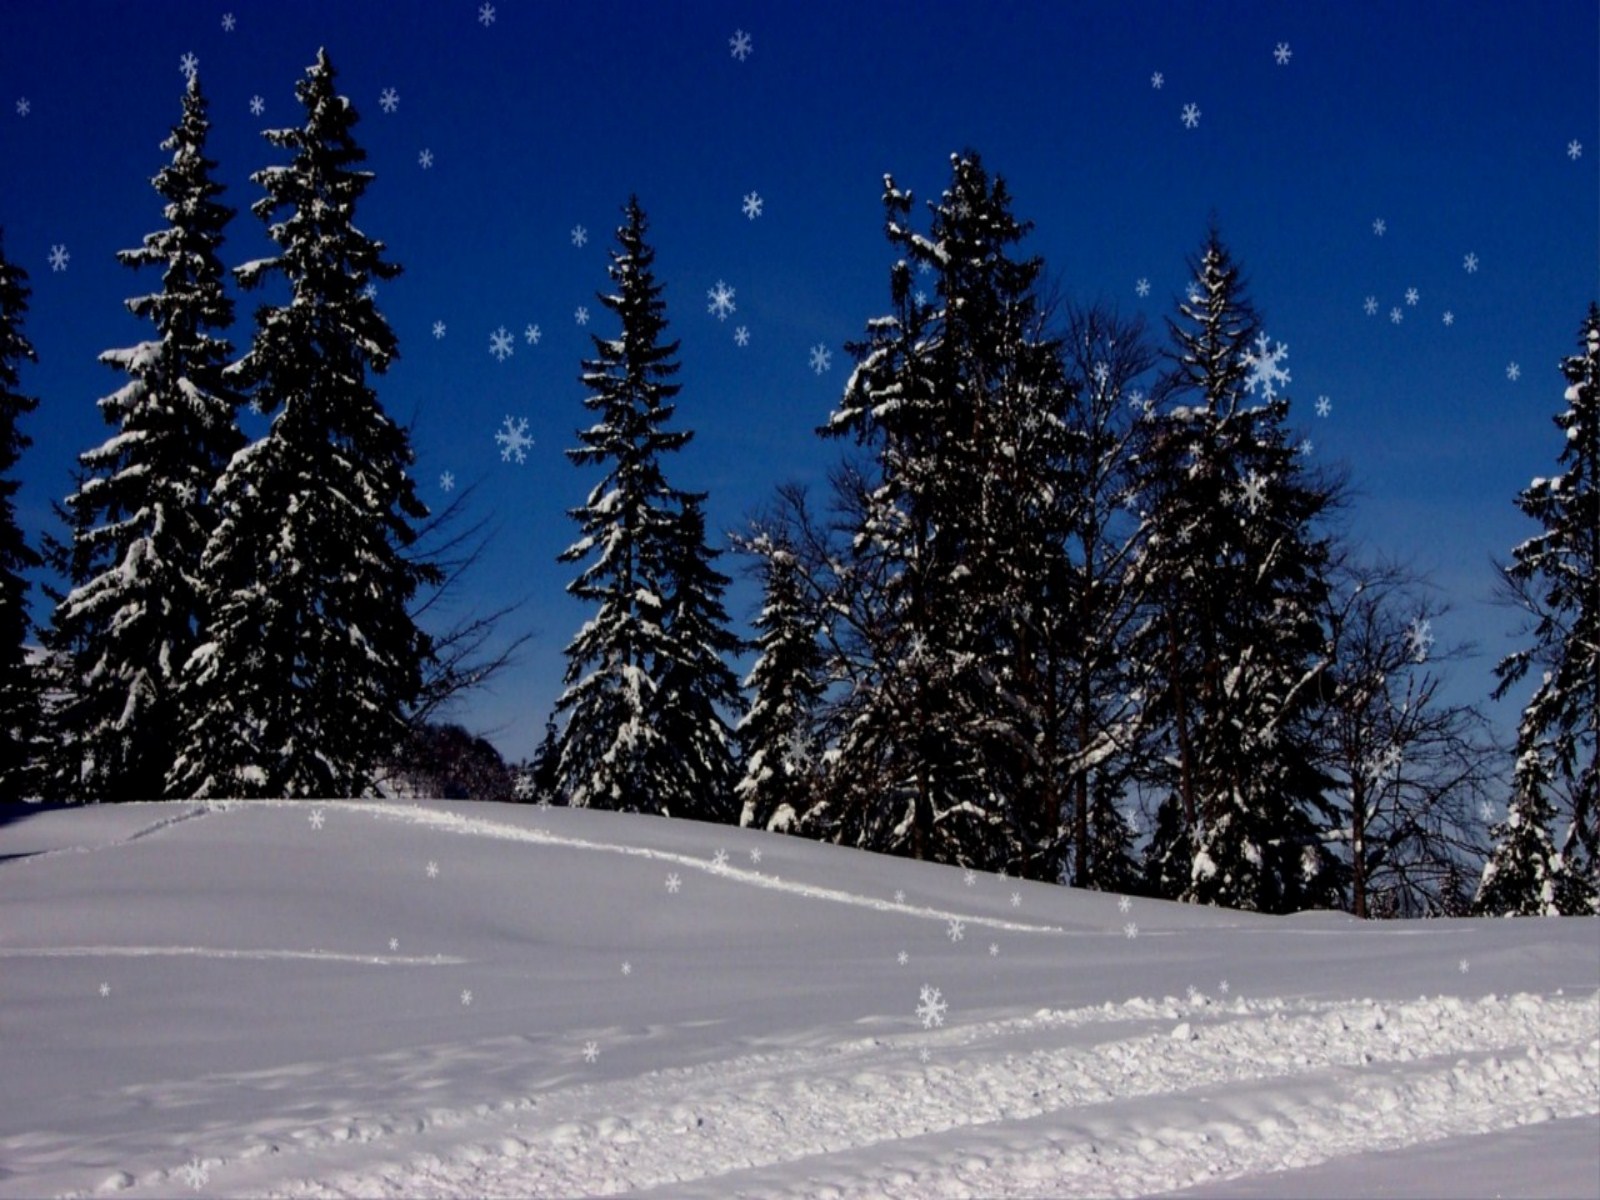 Animated Christmas Wallpaper Snow Falling - WallpaperSafari